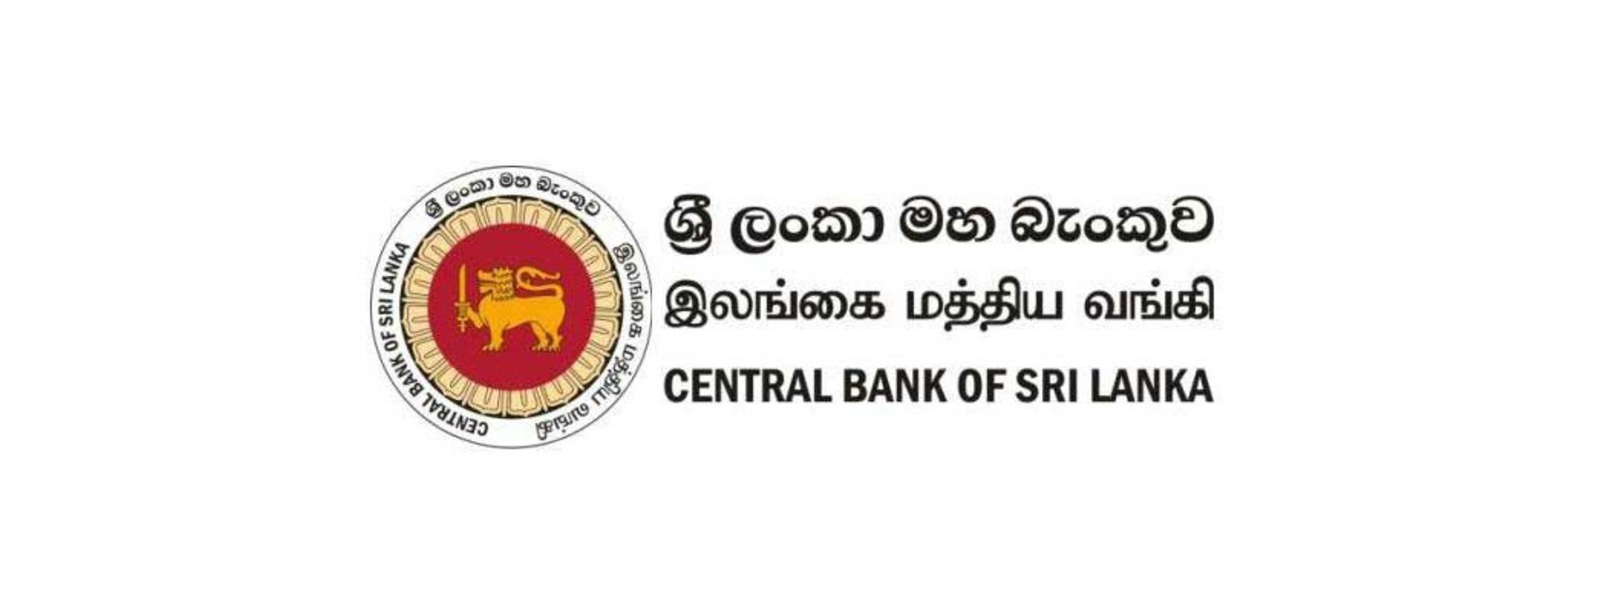 Licensed Banks have not been asked to “Devalue” the Sri Lanka Rupee